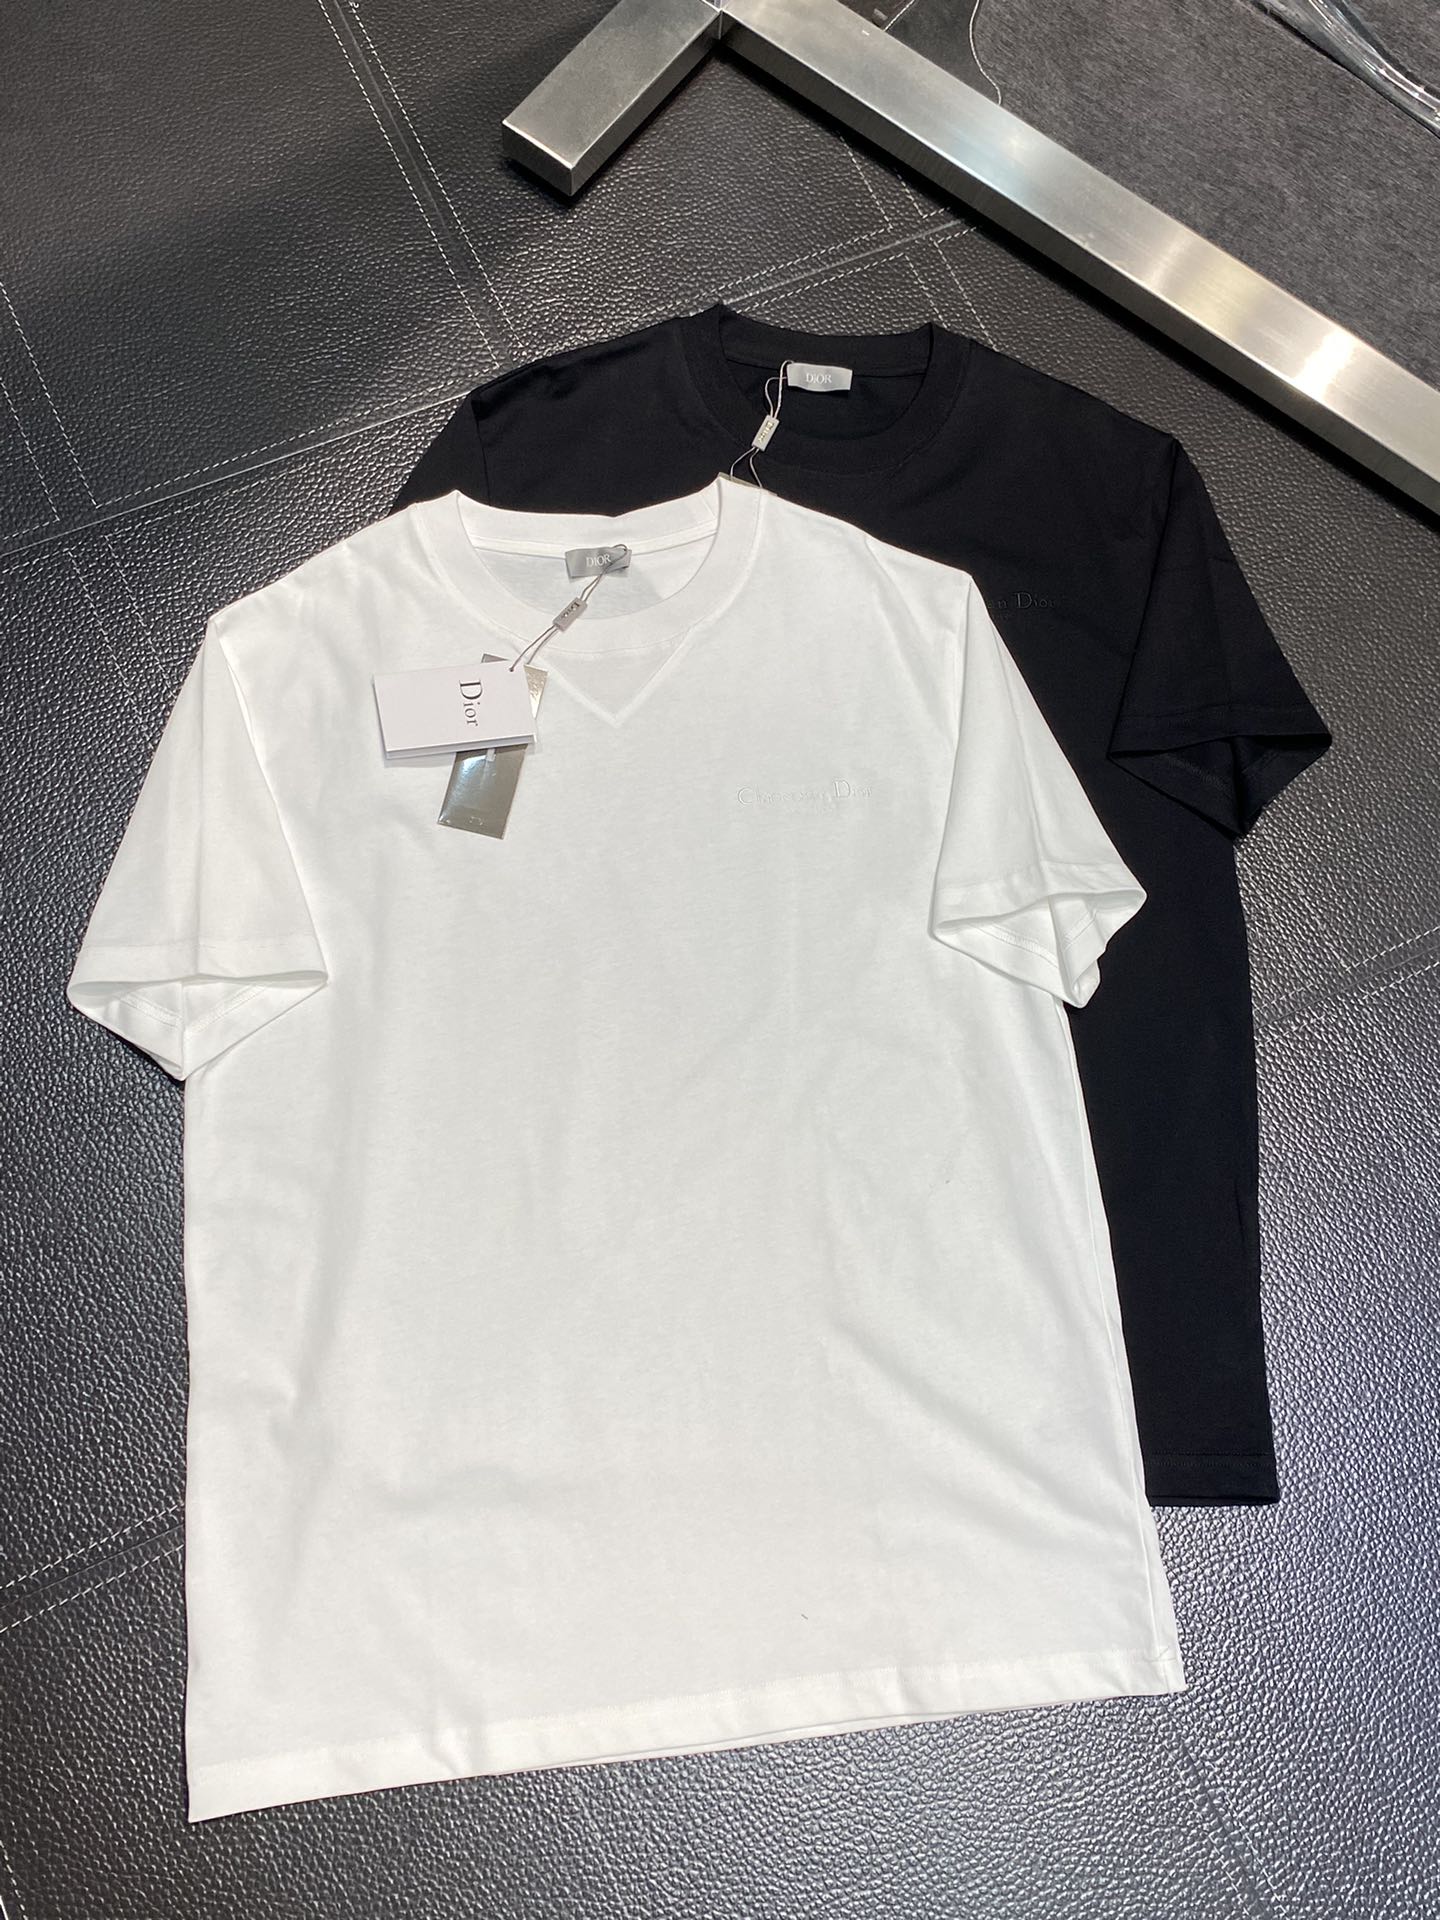 Dior AAA+
 Clothing T-Shirt Men Fashion Short Sleeve